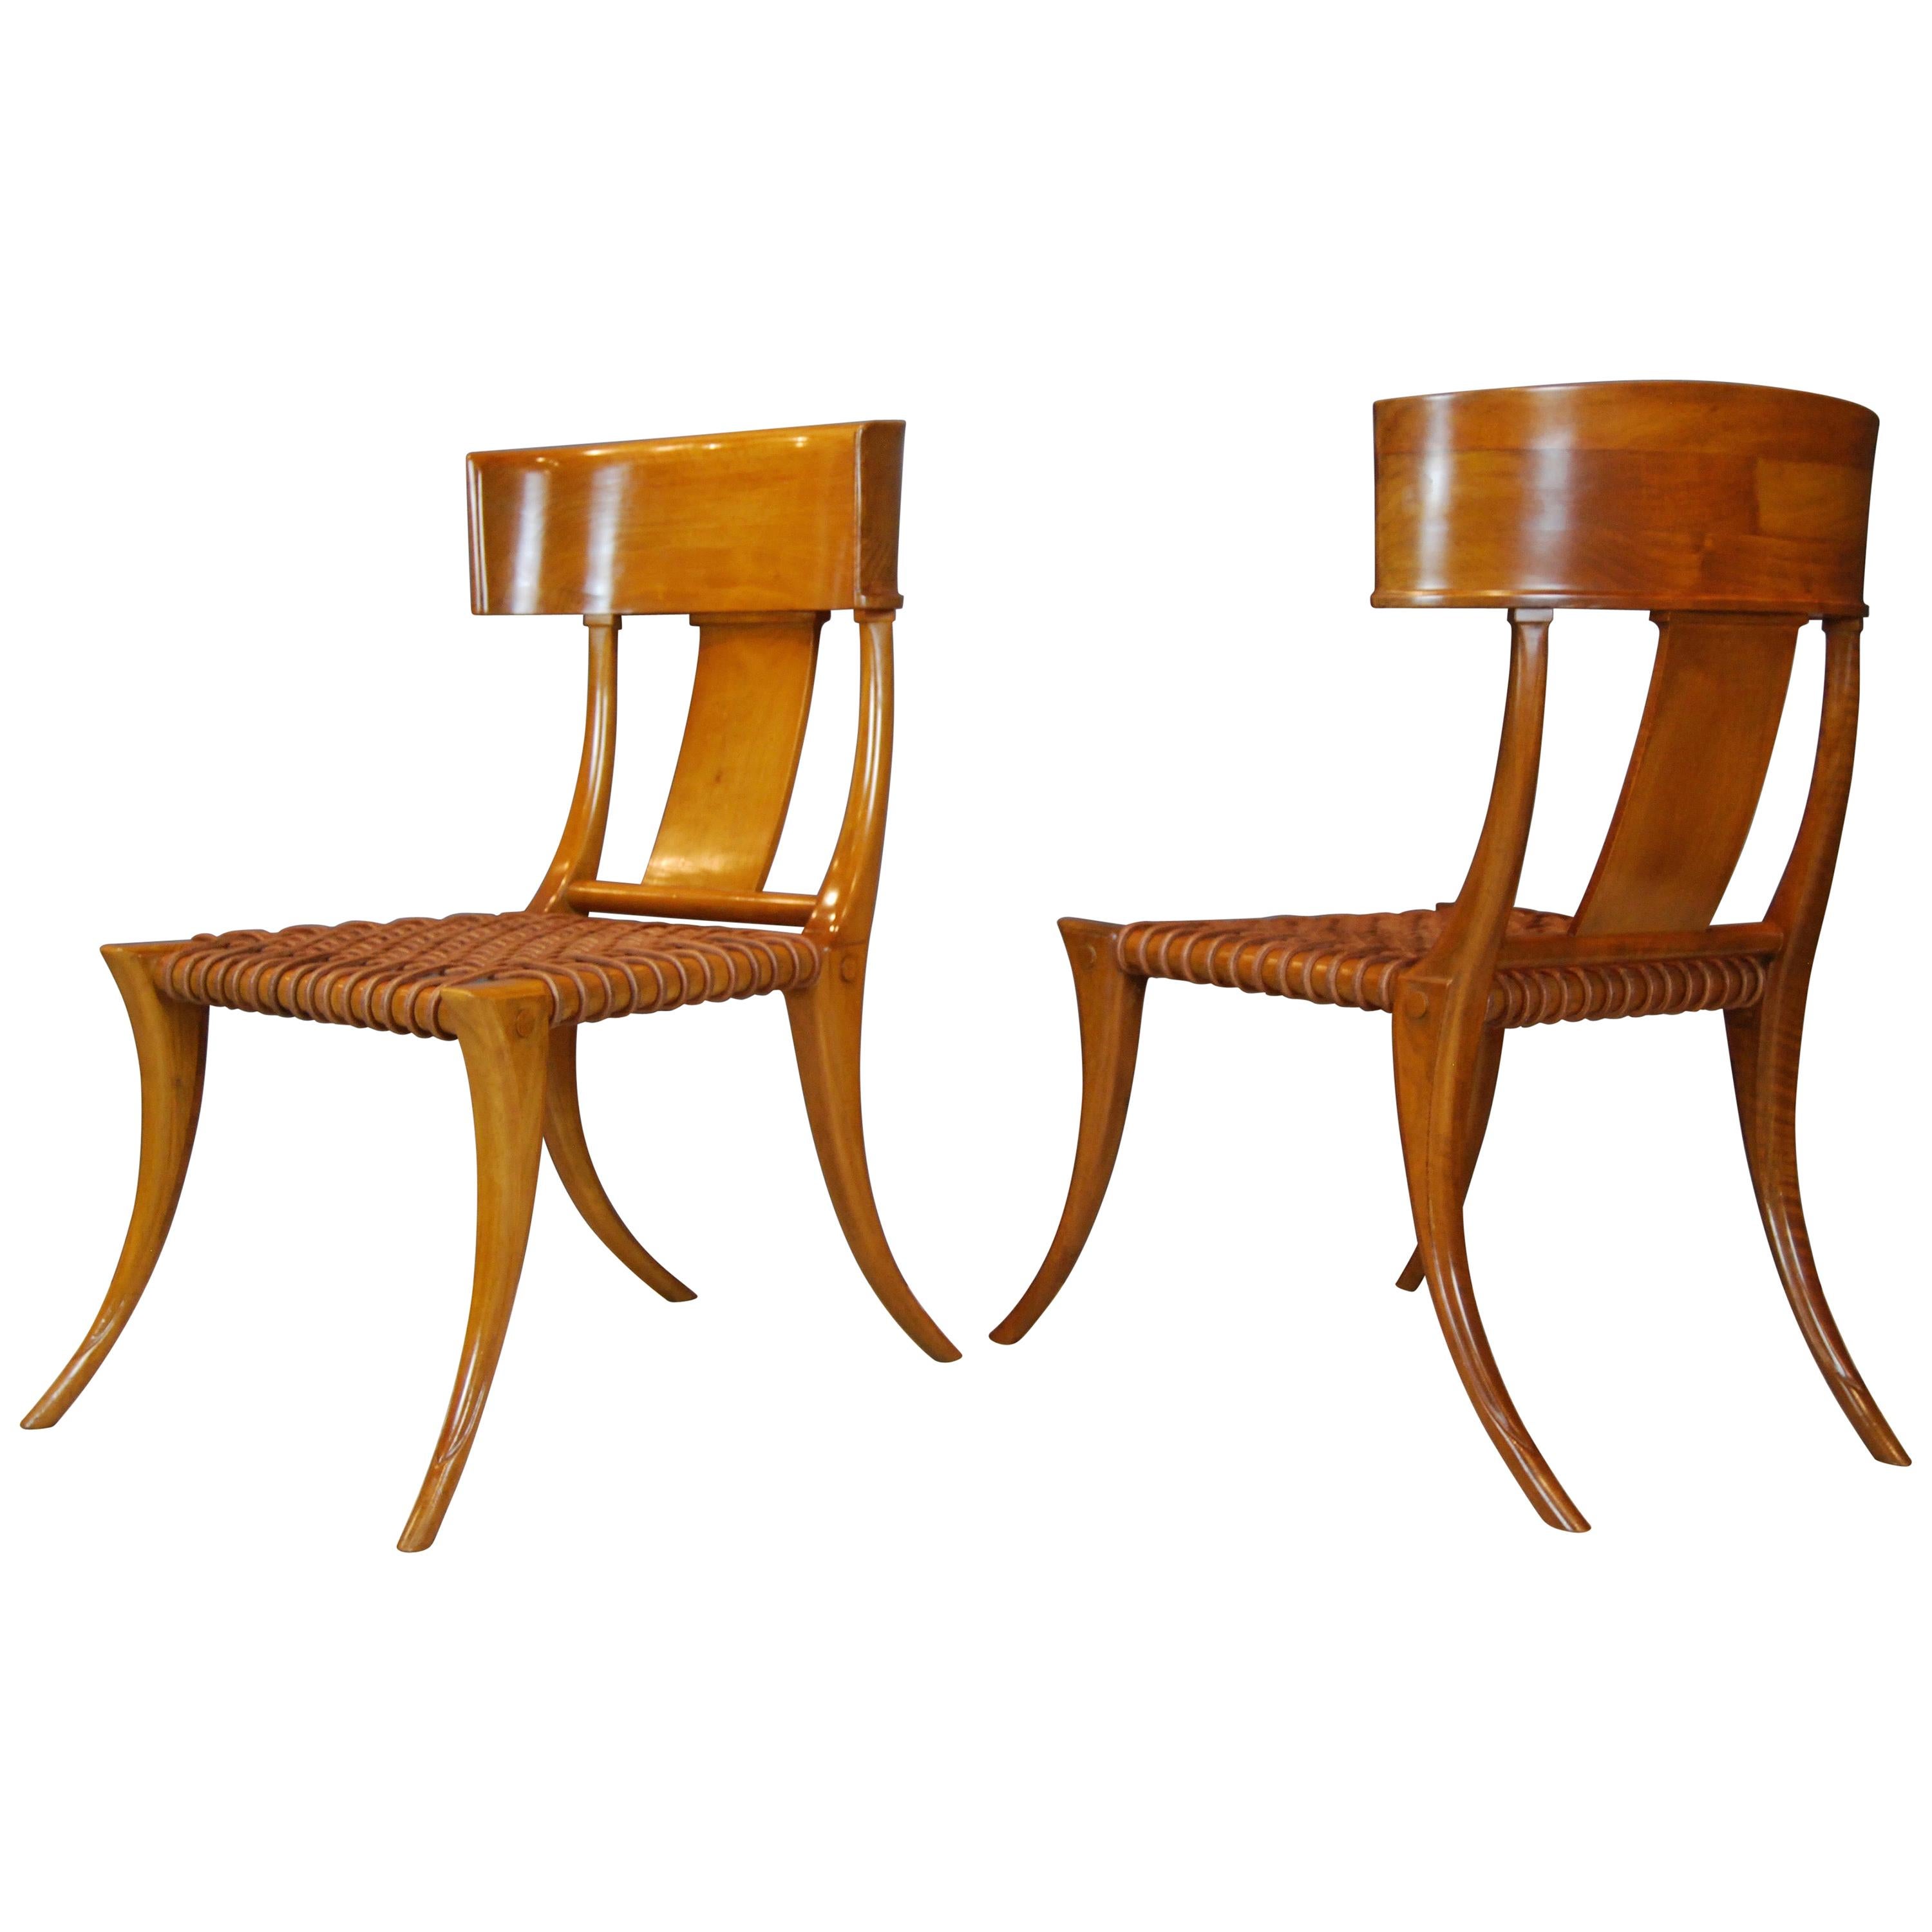 T. H. Robsjohn - Gibbings Klismos Chairs, 1960s